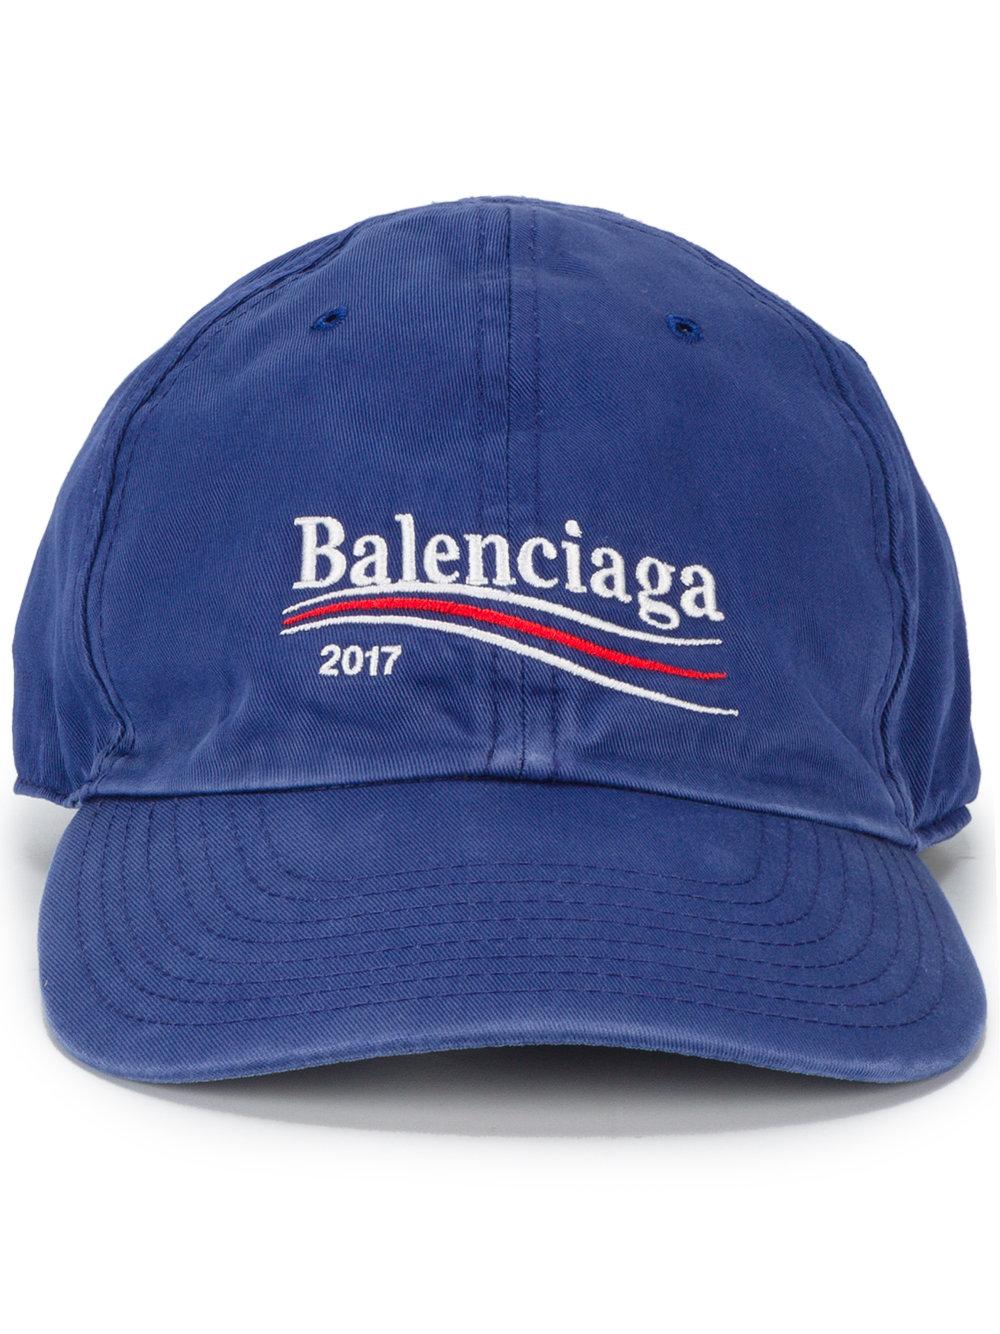 BALENCIAGA バレンシアガ ロゴキャップ バイカラー - 帽子